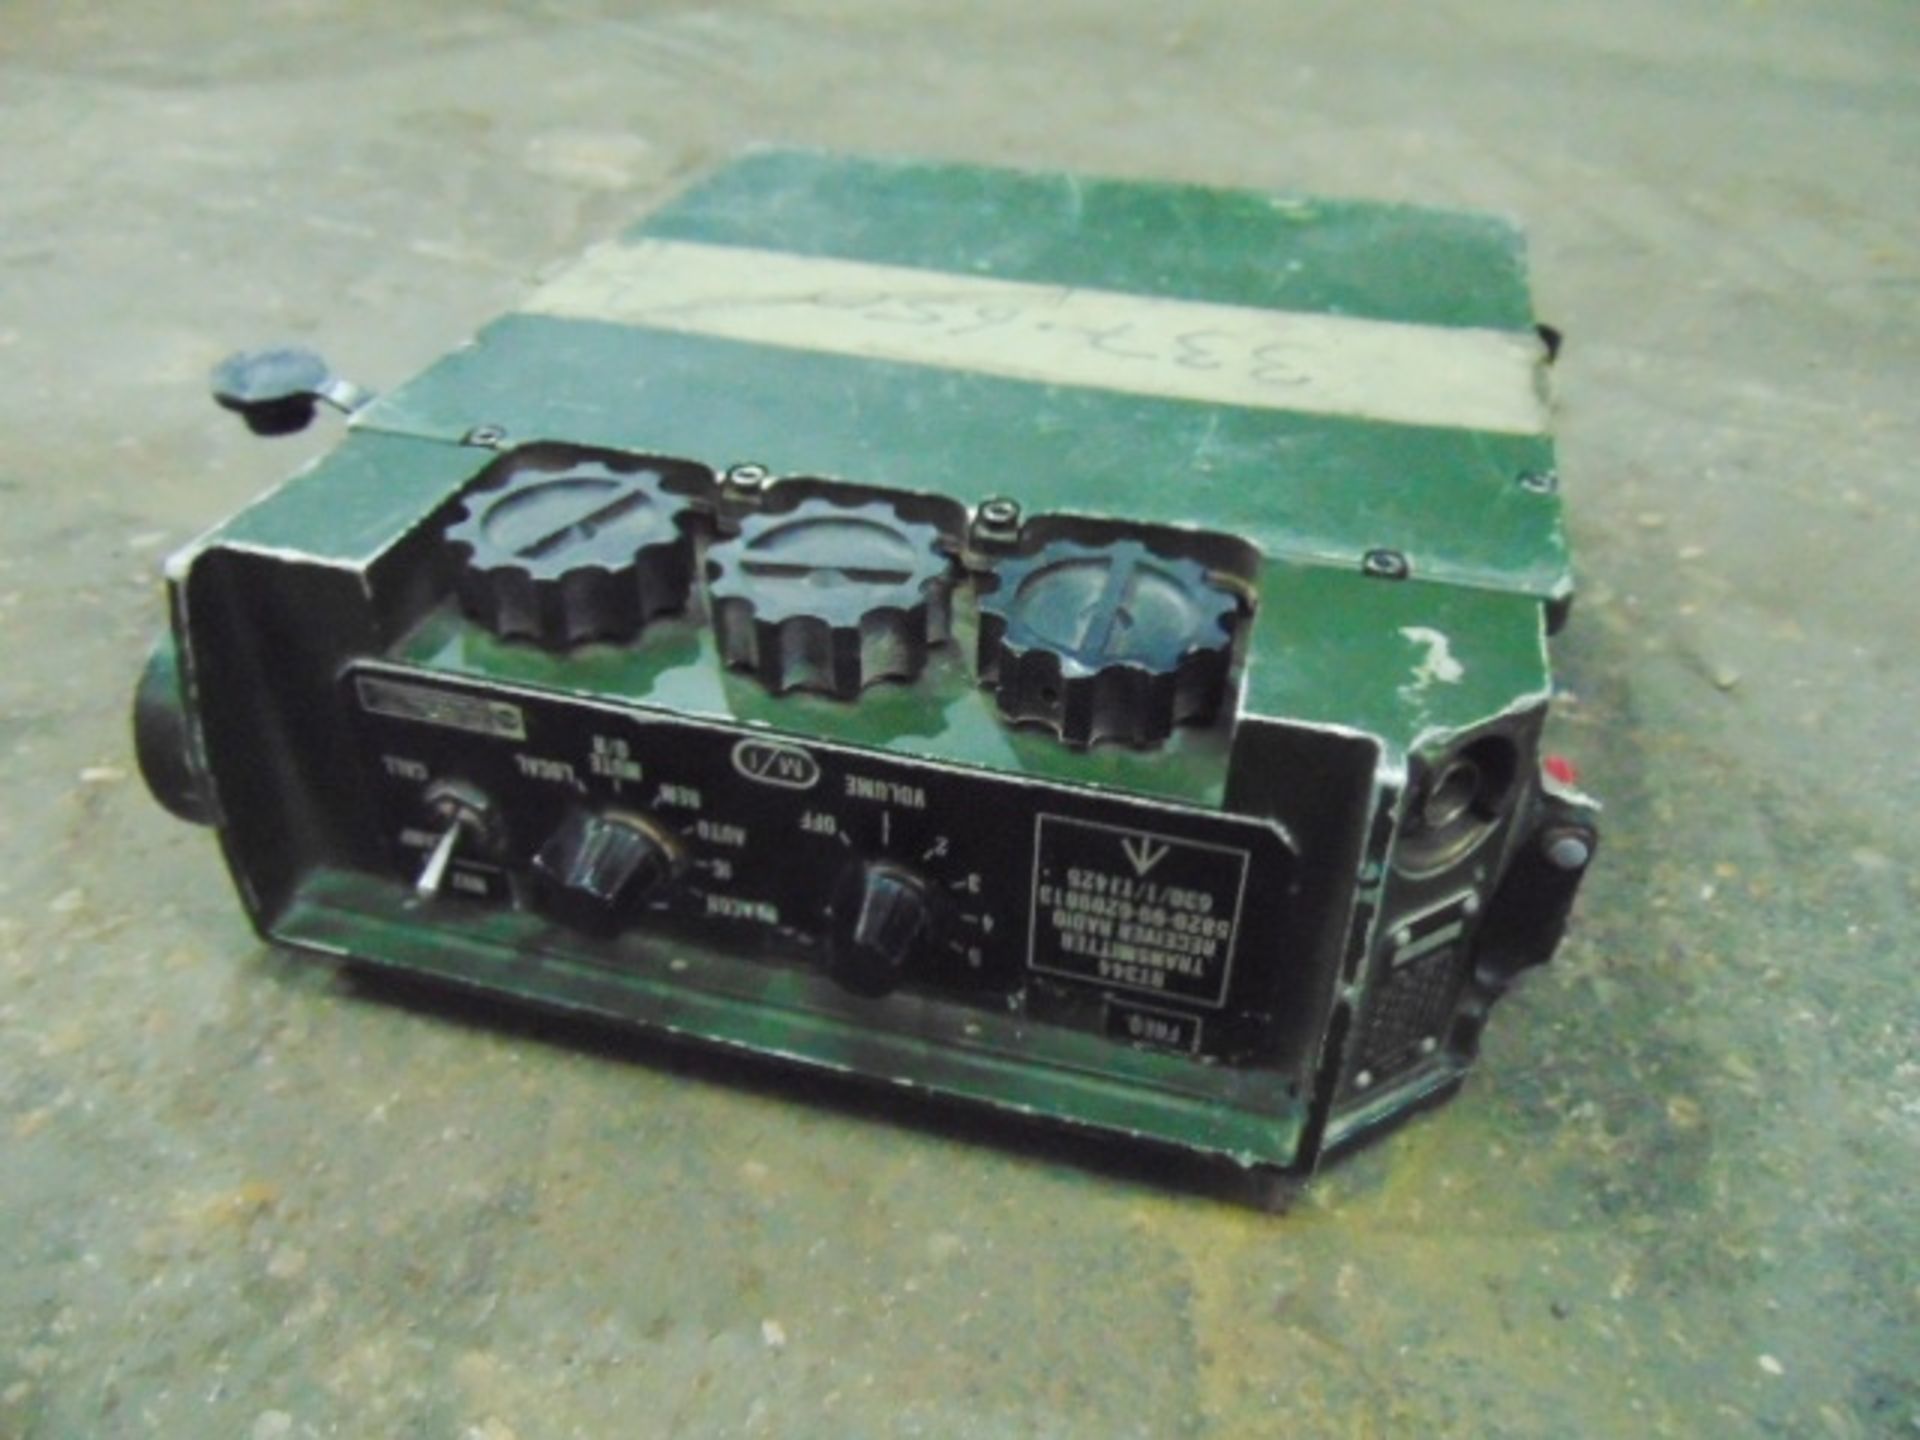 Very Rare SAS Clansman RT-344 / PRC-344 UHF Man-pack Transceiver - Image 3 of 5